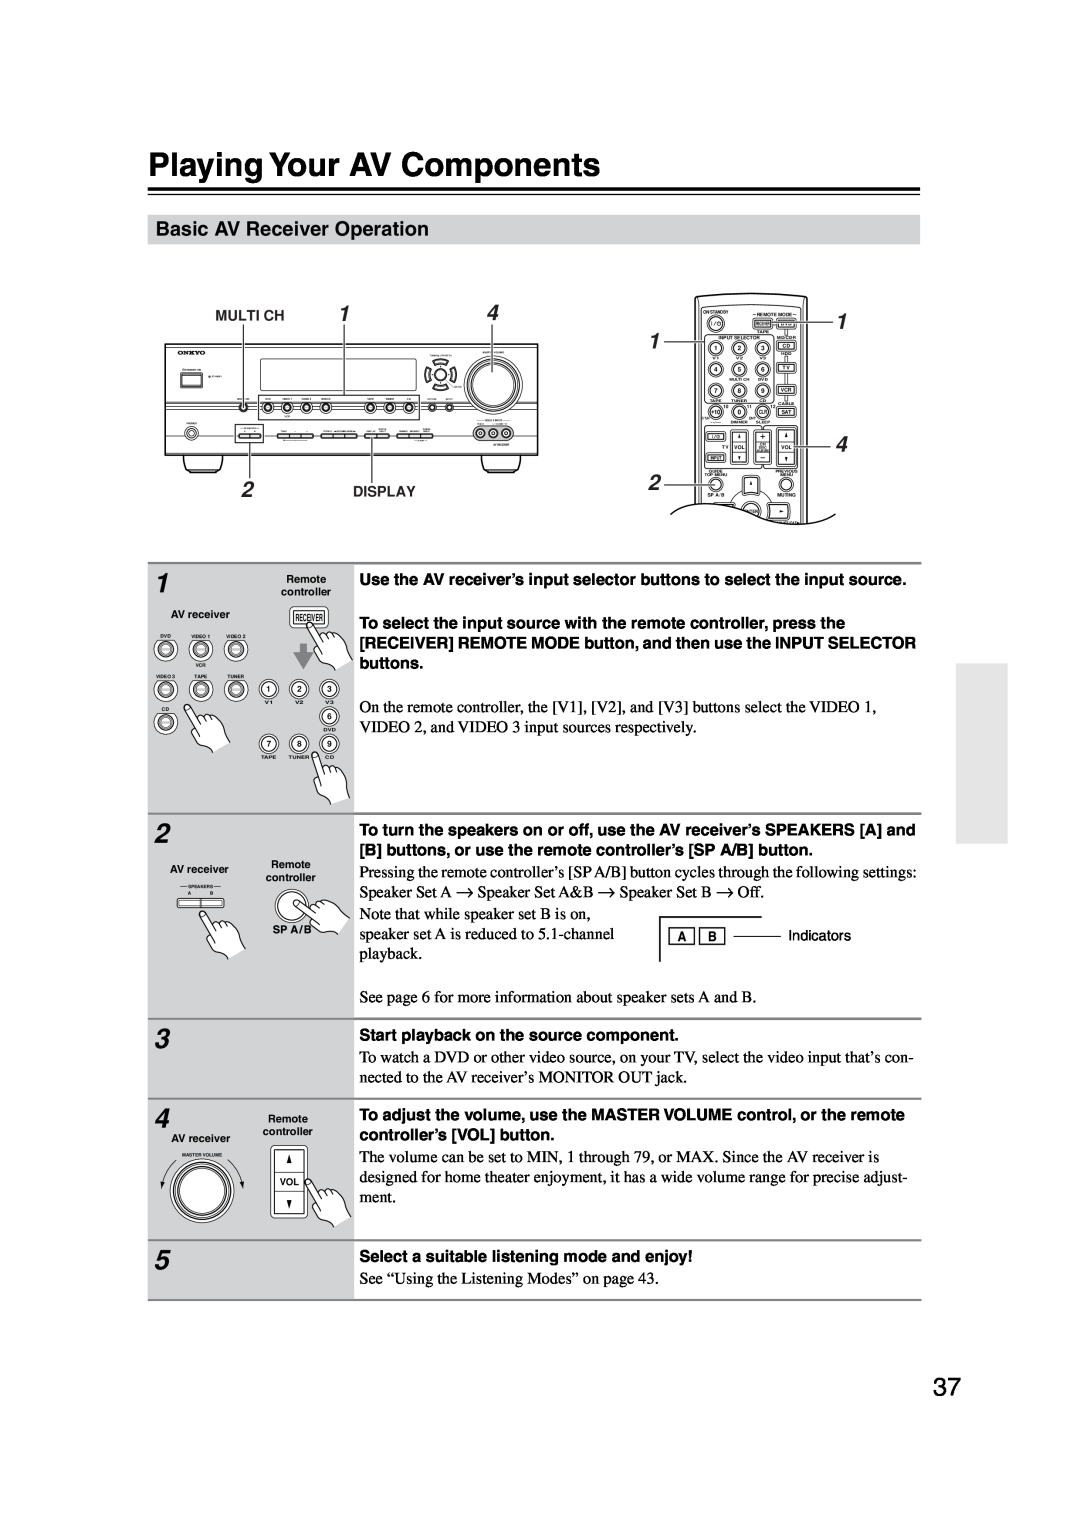 Onkyo TX-SR574 instruction manual Playing Your AV Components, Basic AV Receiver Operation 